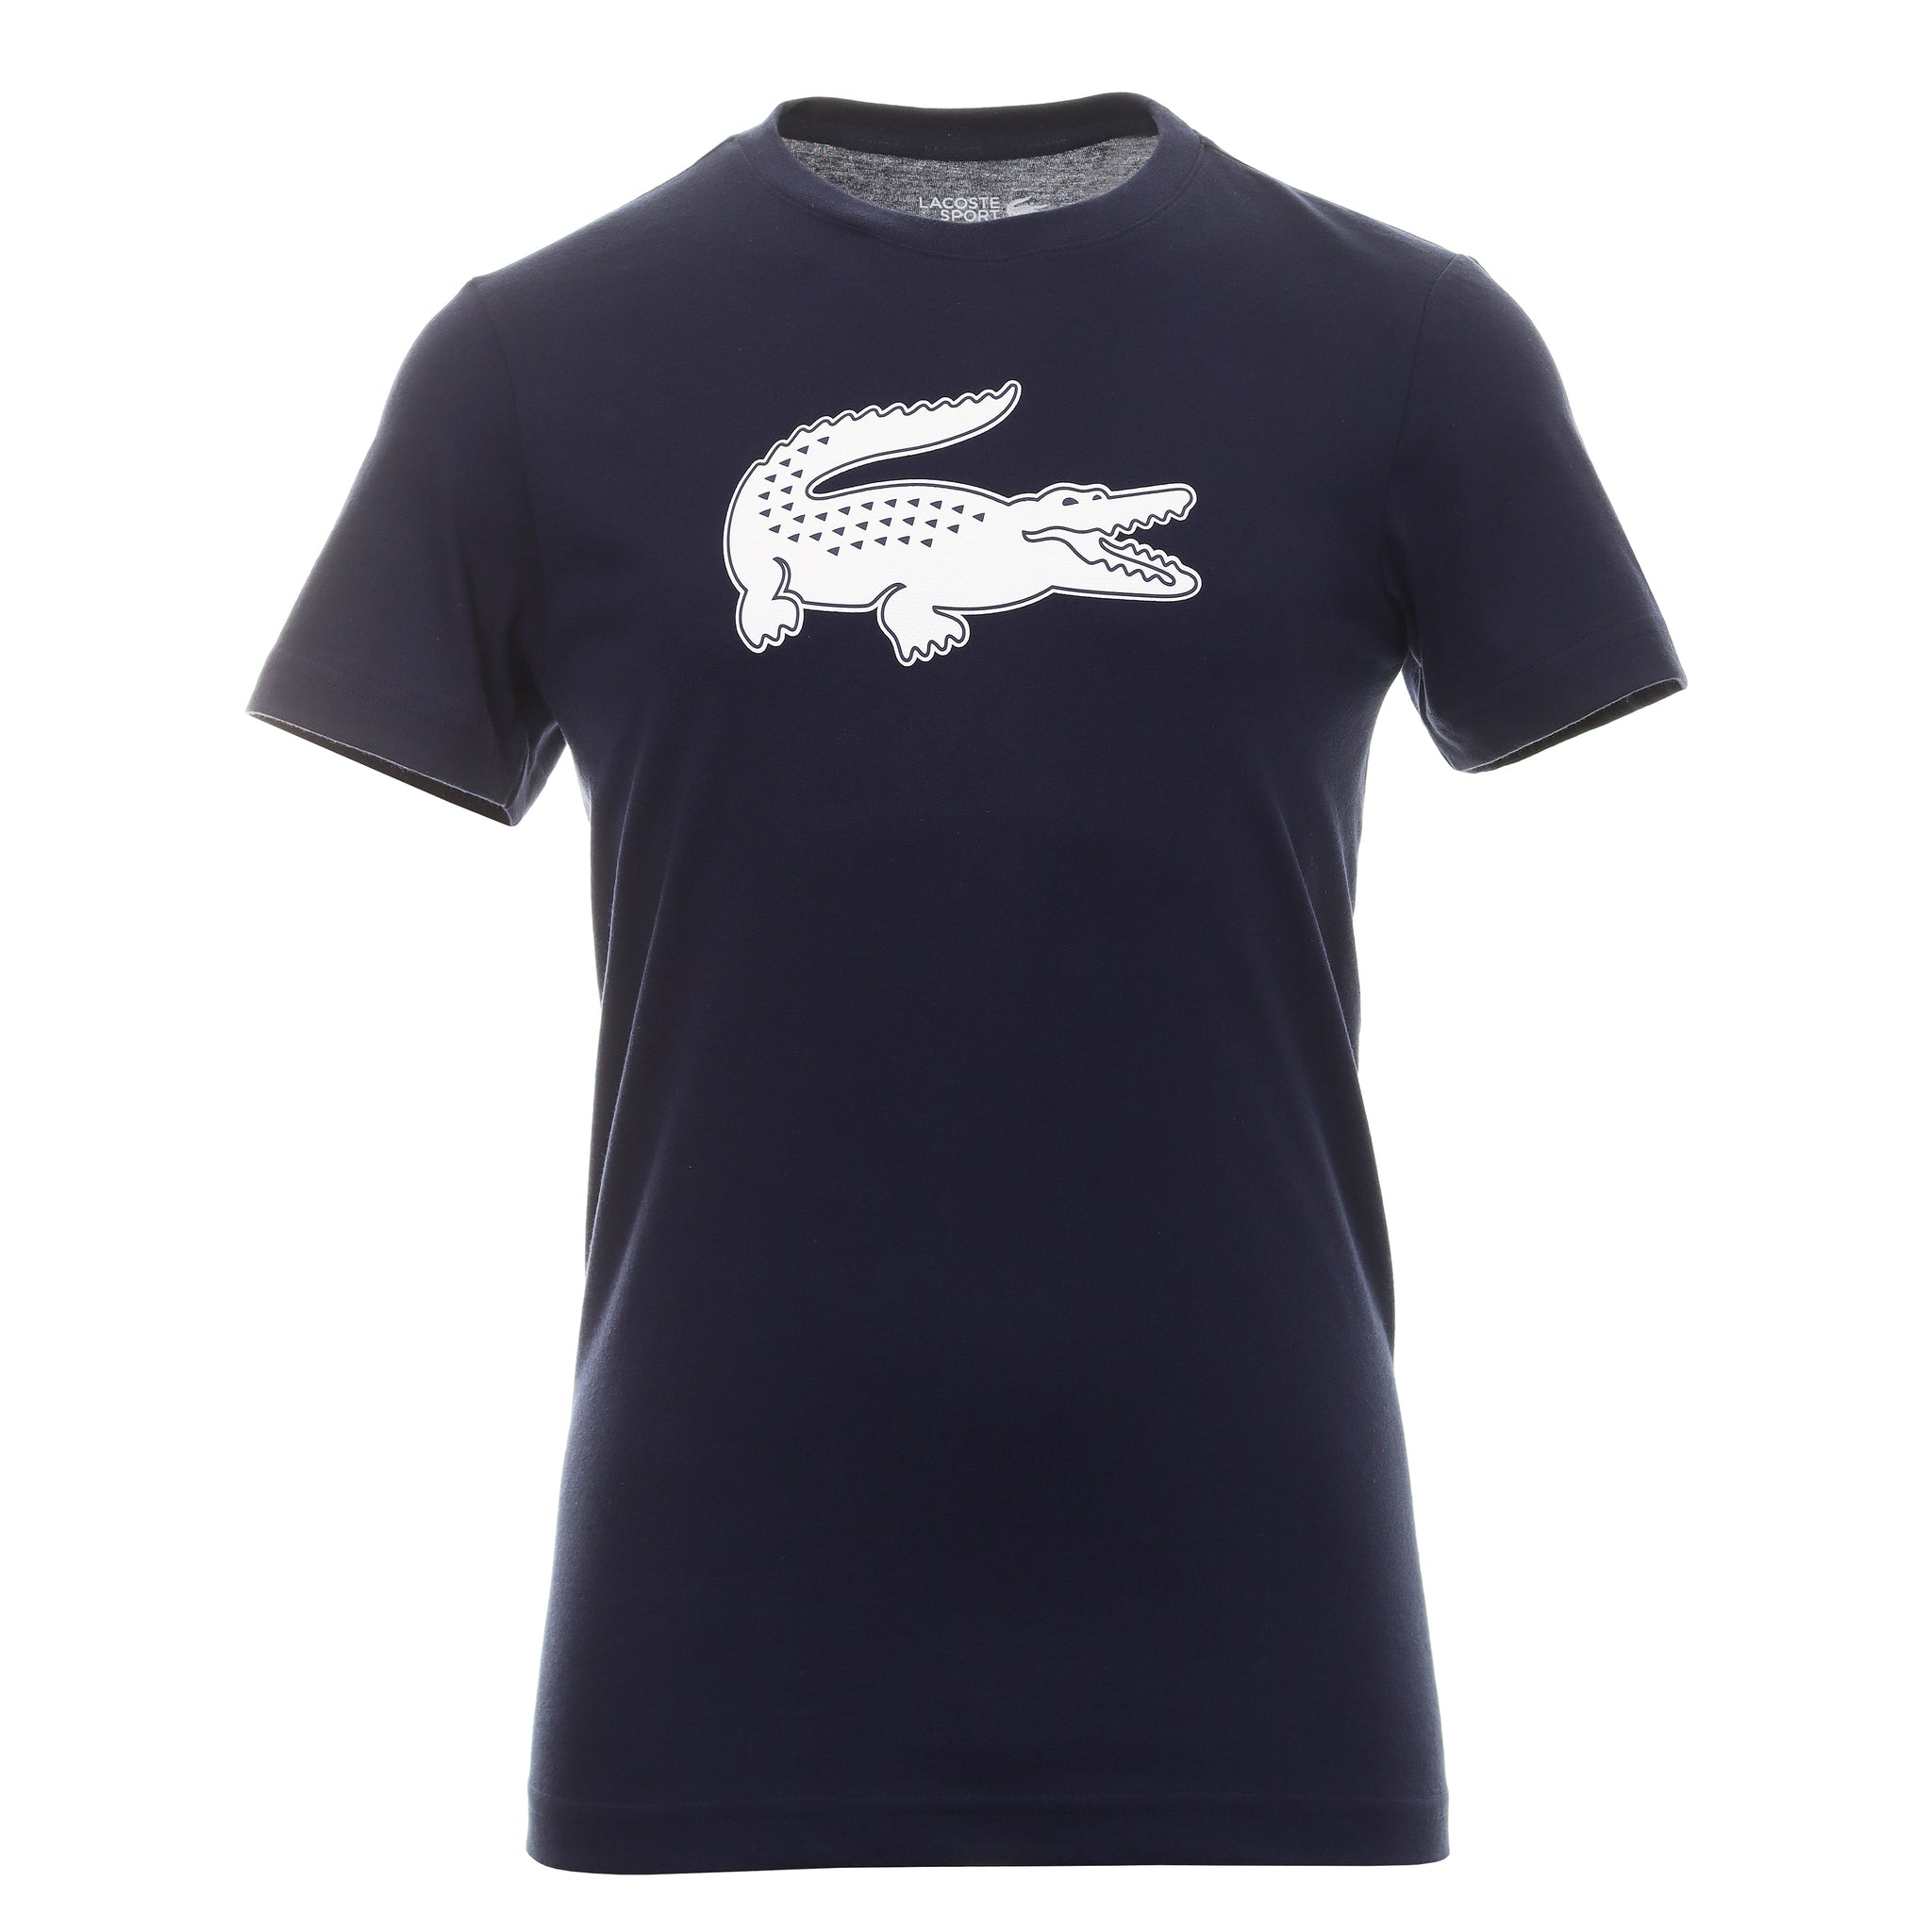 Lacoste Large Croc Print Tee Shirt